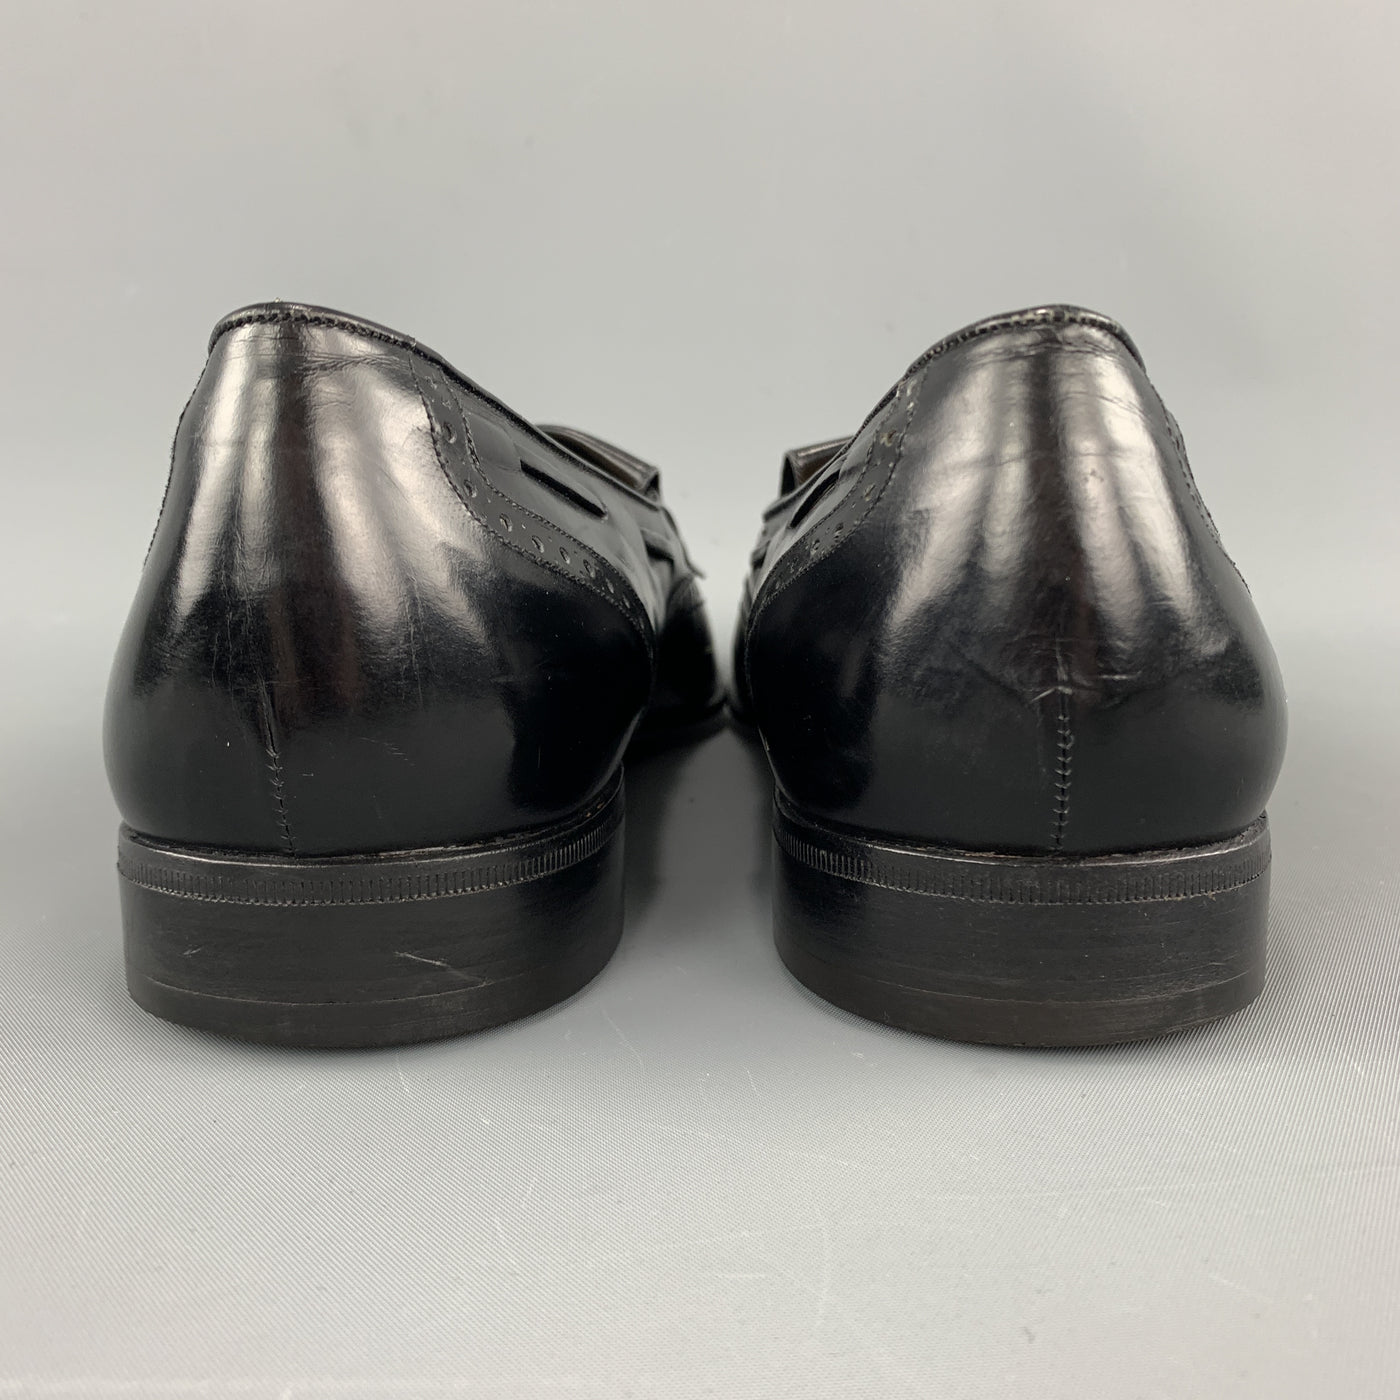 SALVATORE FERRAGAMO Size 11.5 Black Leather Eyelash Tassel Loafers